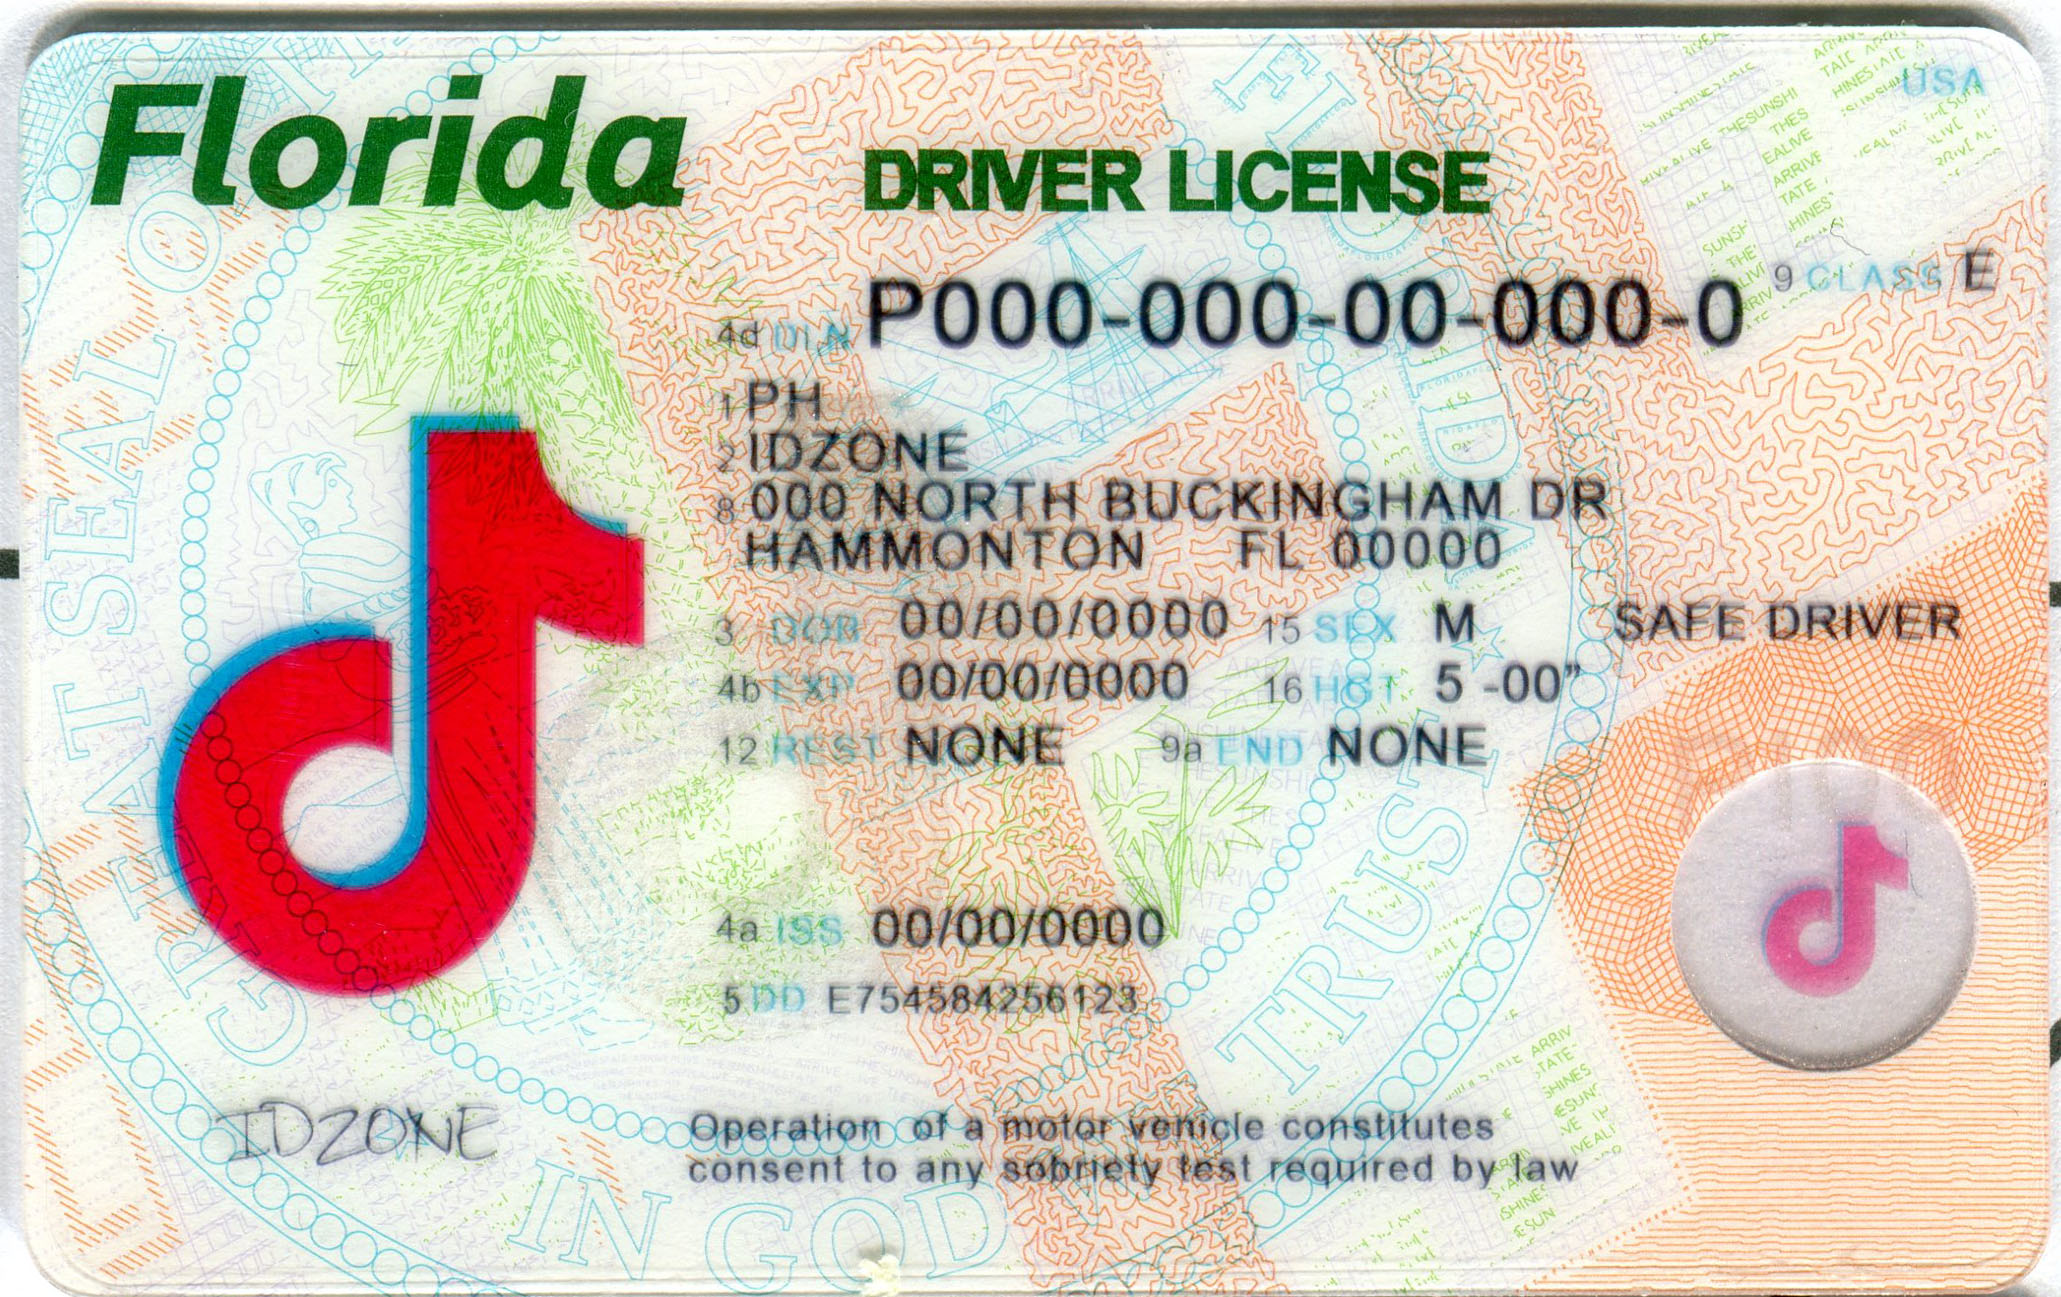 FLORIDA-New fake id